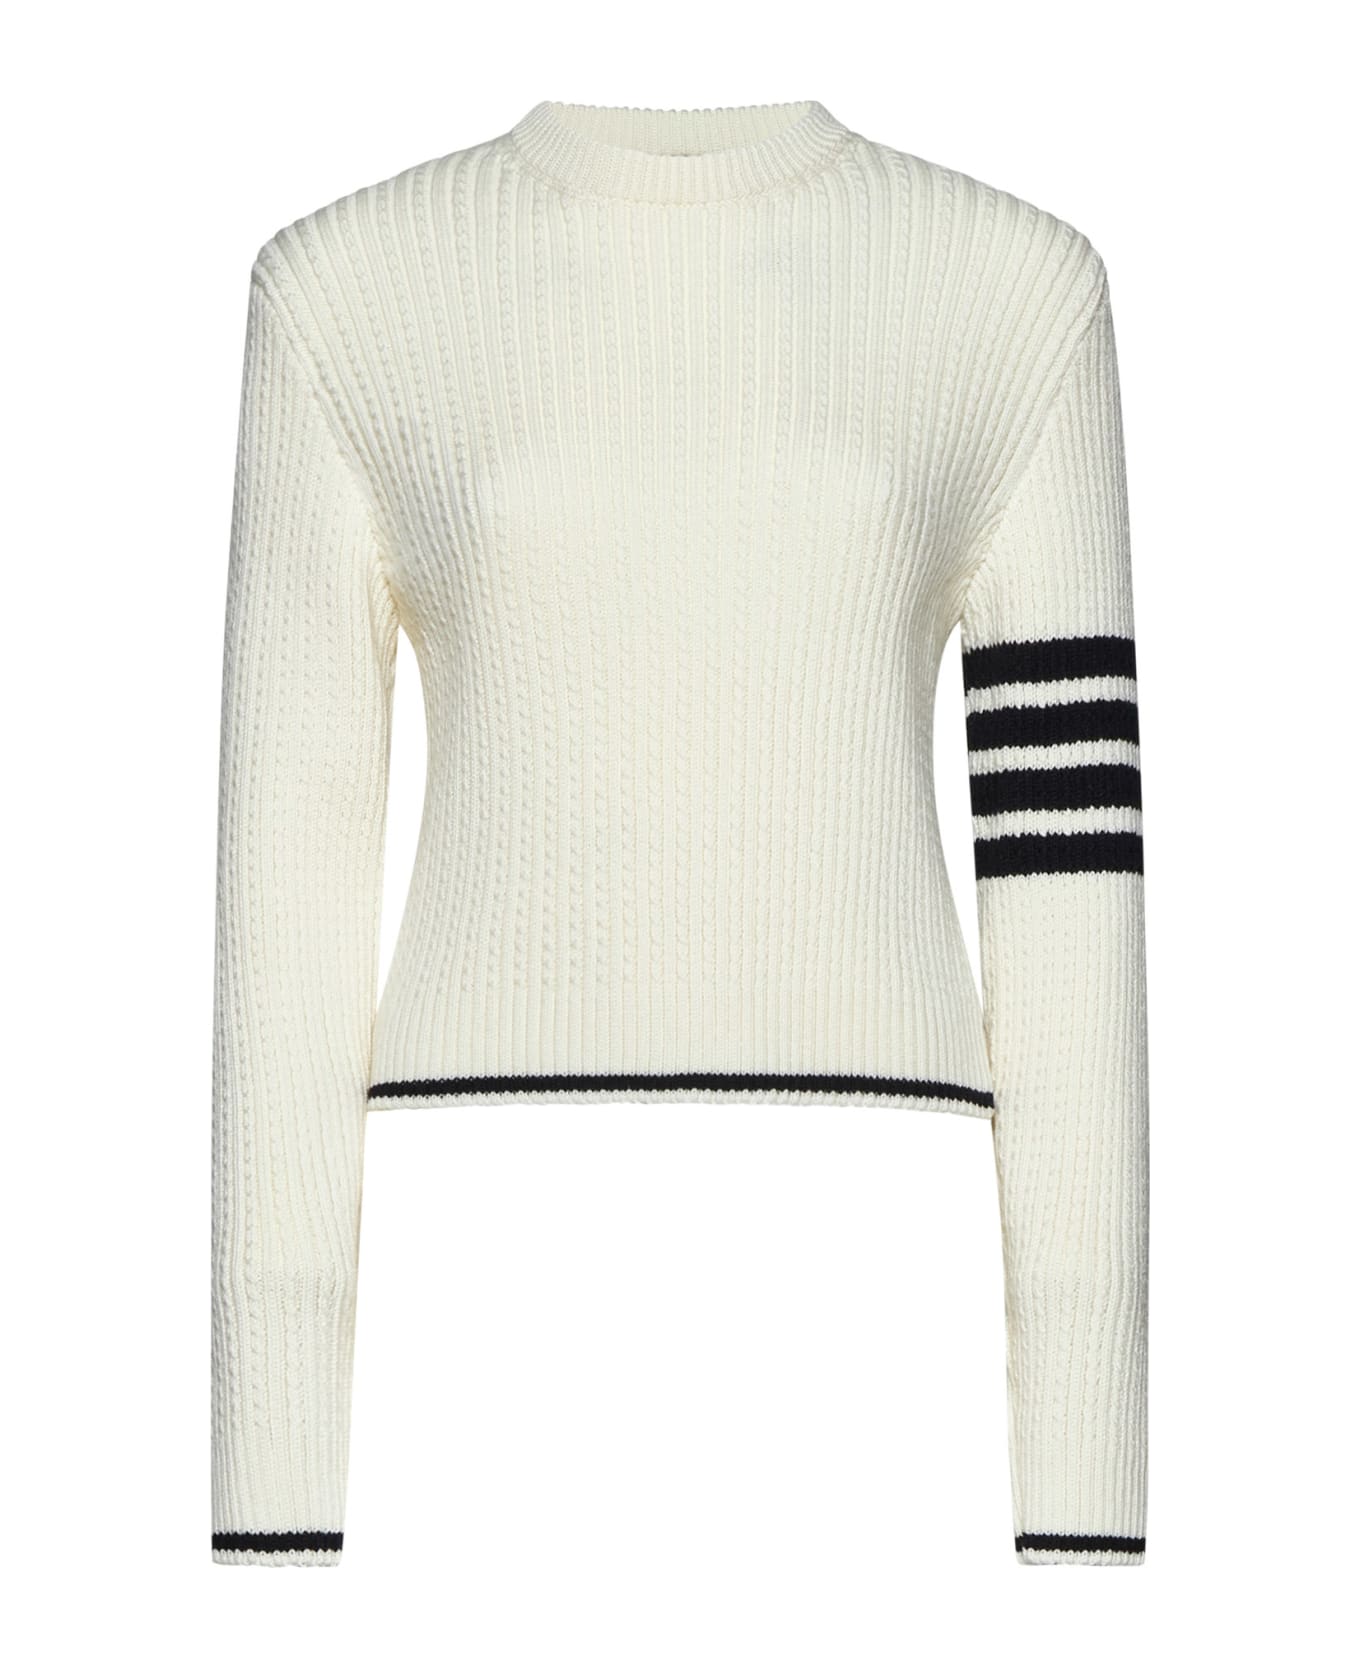 Thom Browne Sweater - White